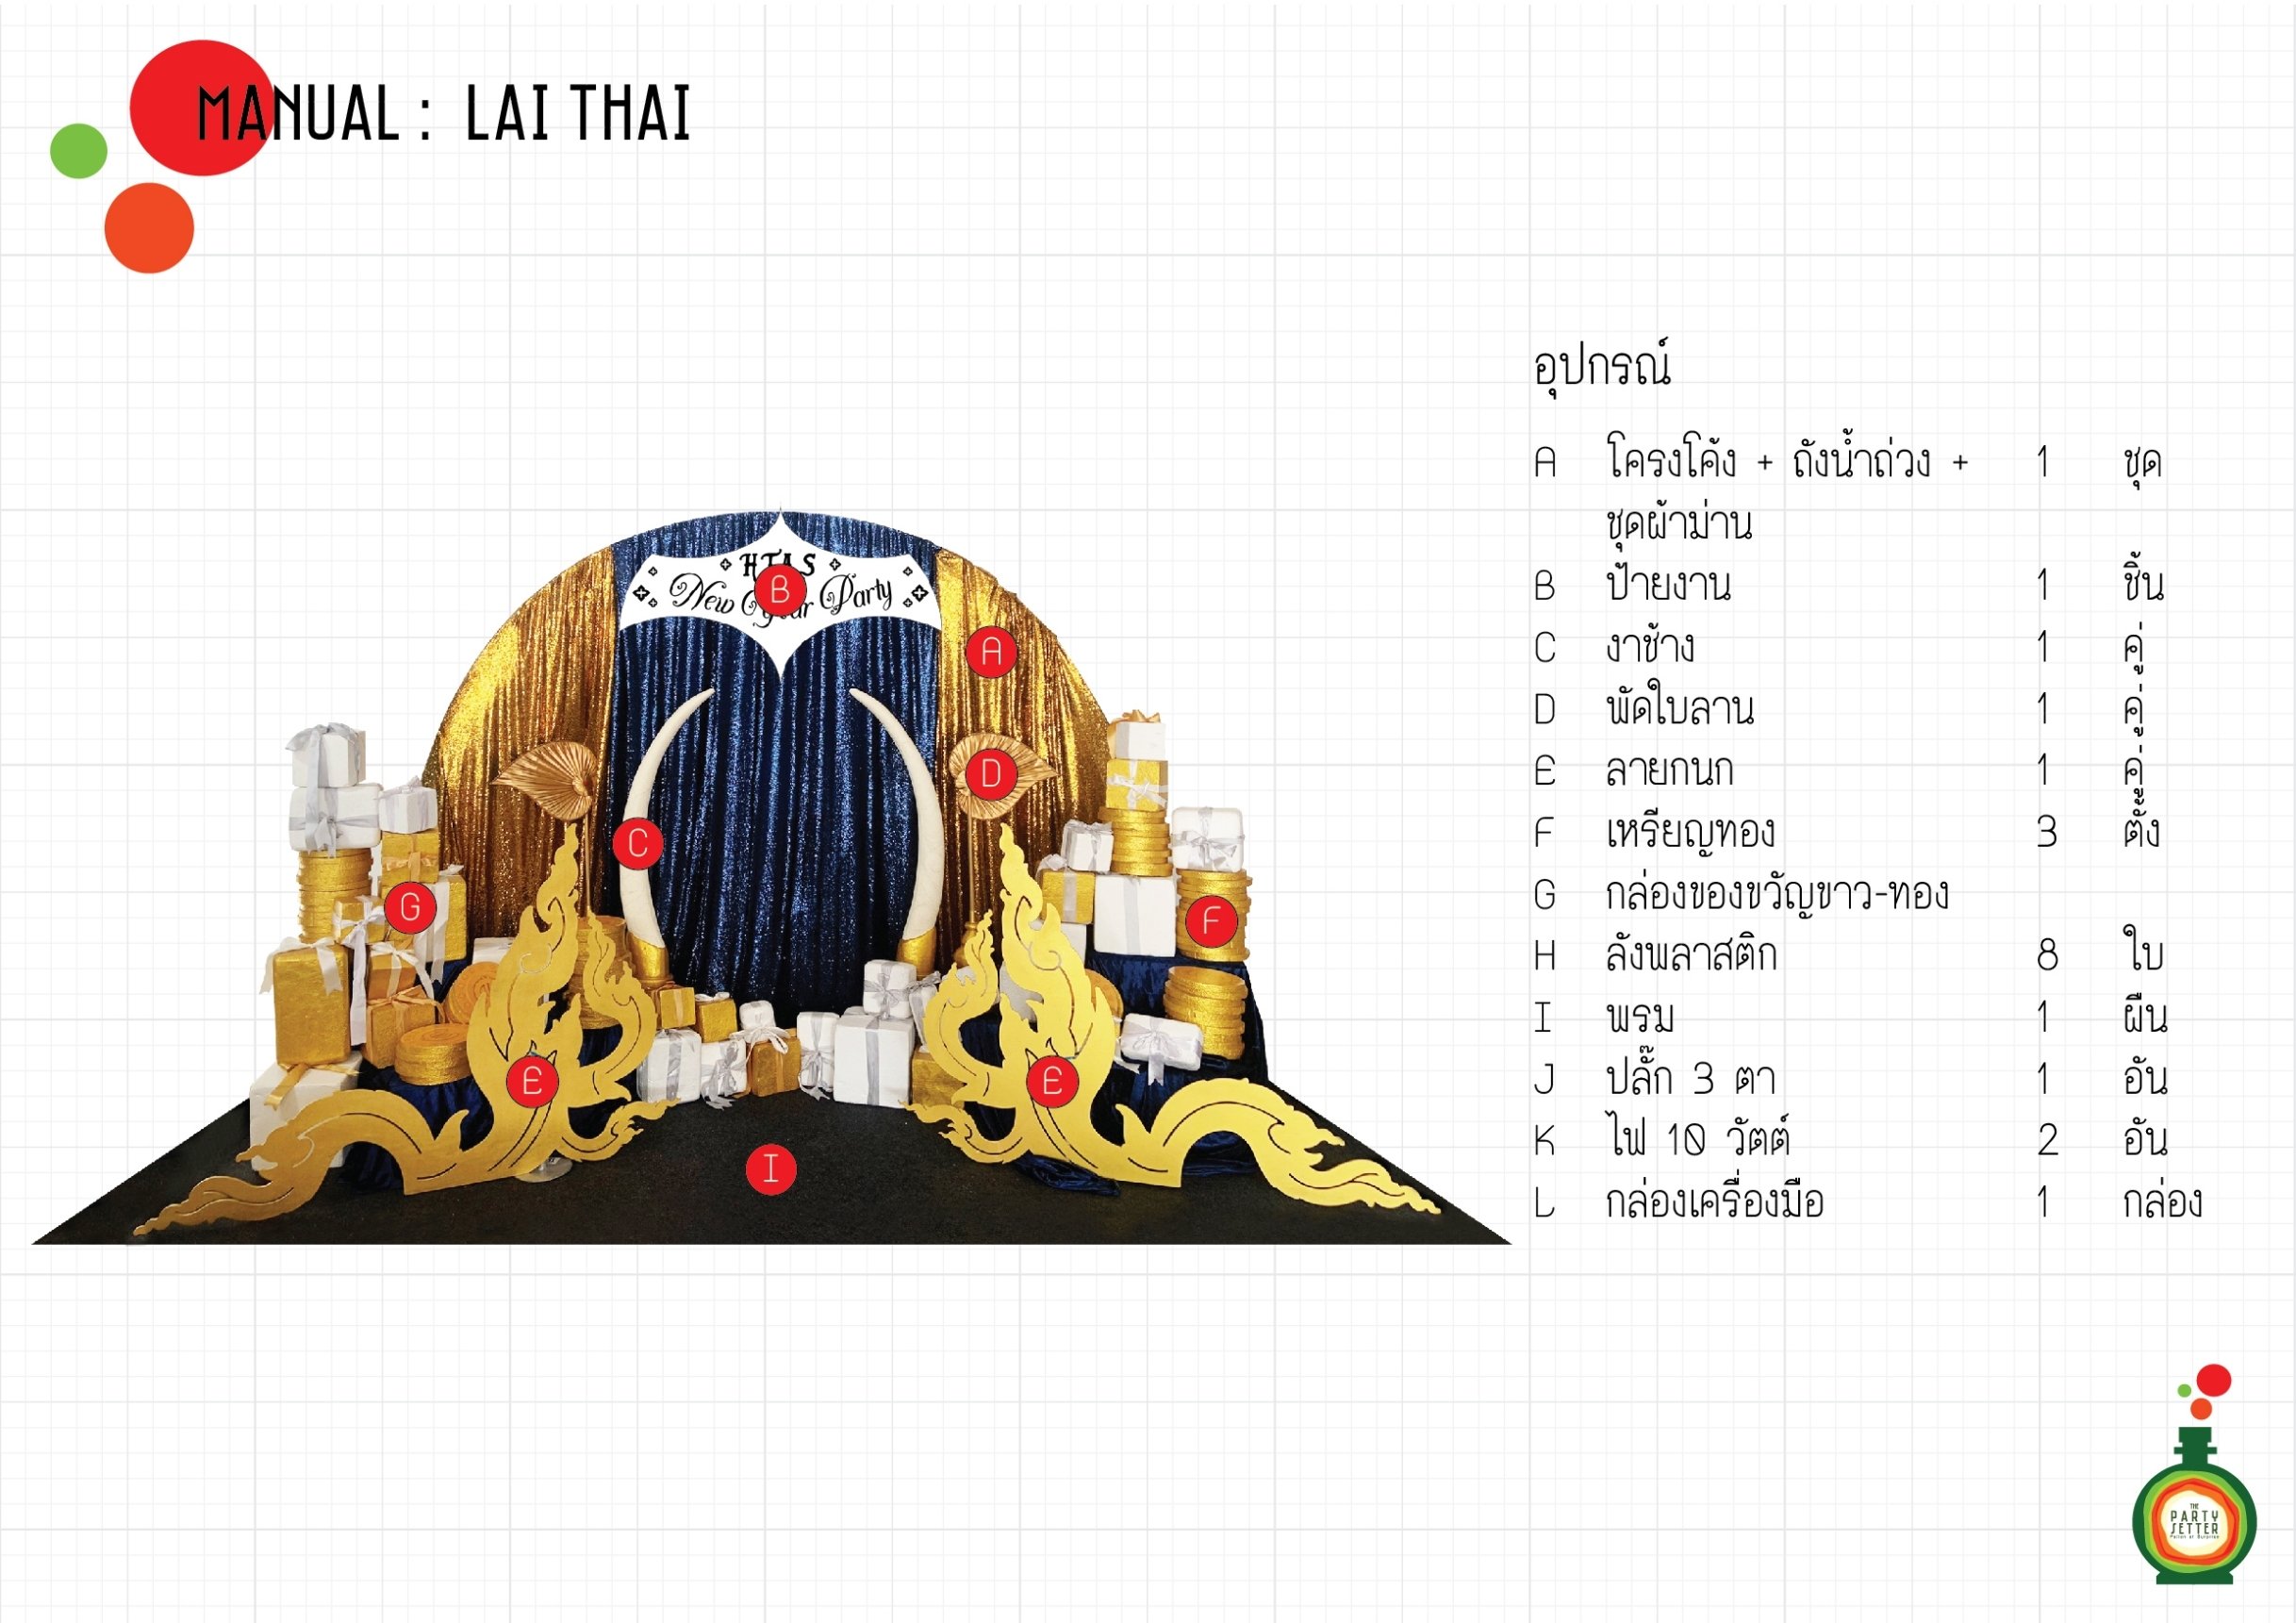 Manual_Lai Thai_00-01.jpg